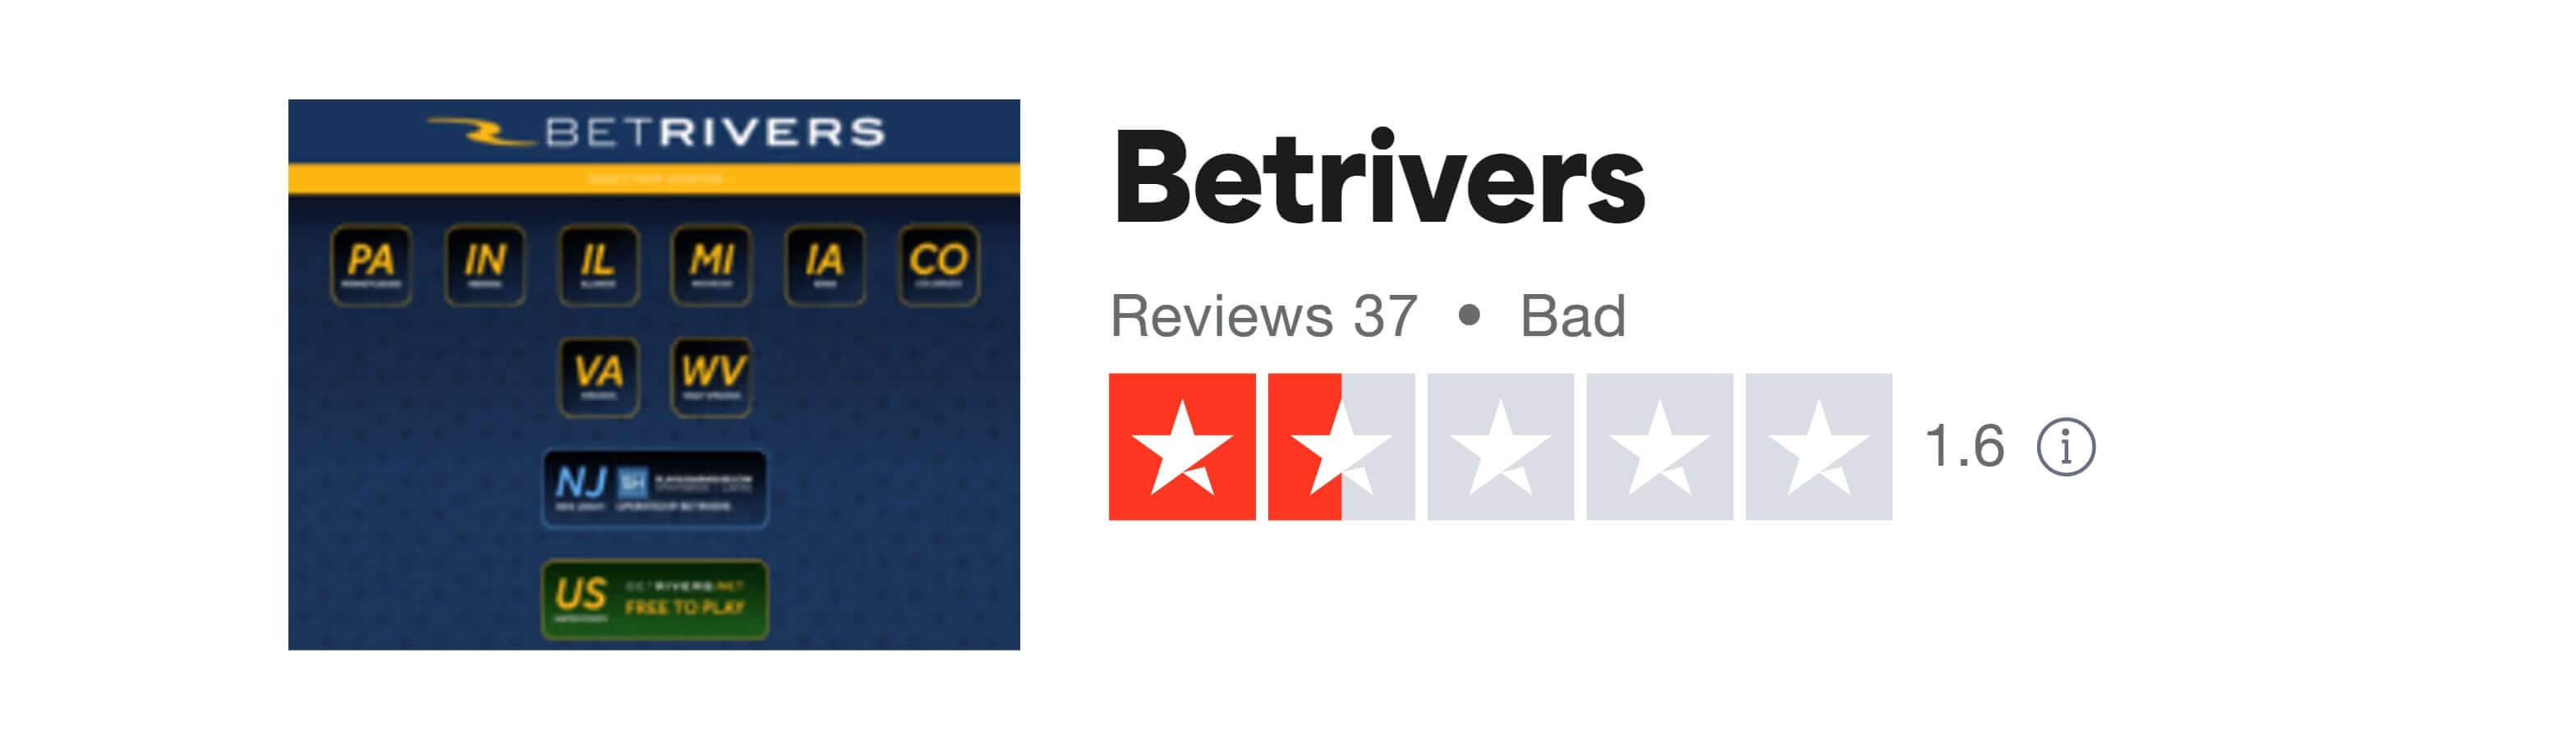 Trustpilot rating screenshot for the BetRivers NJ